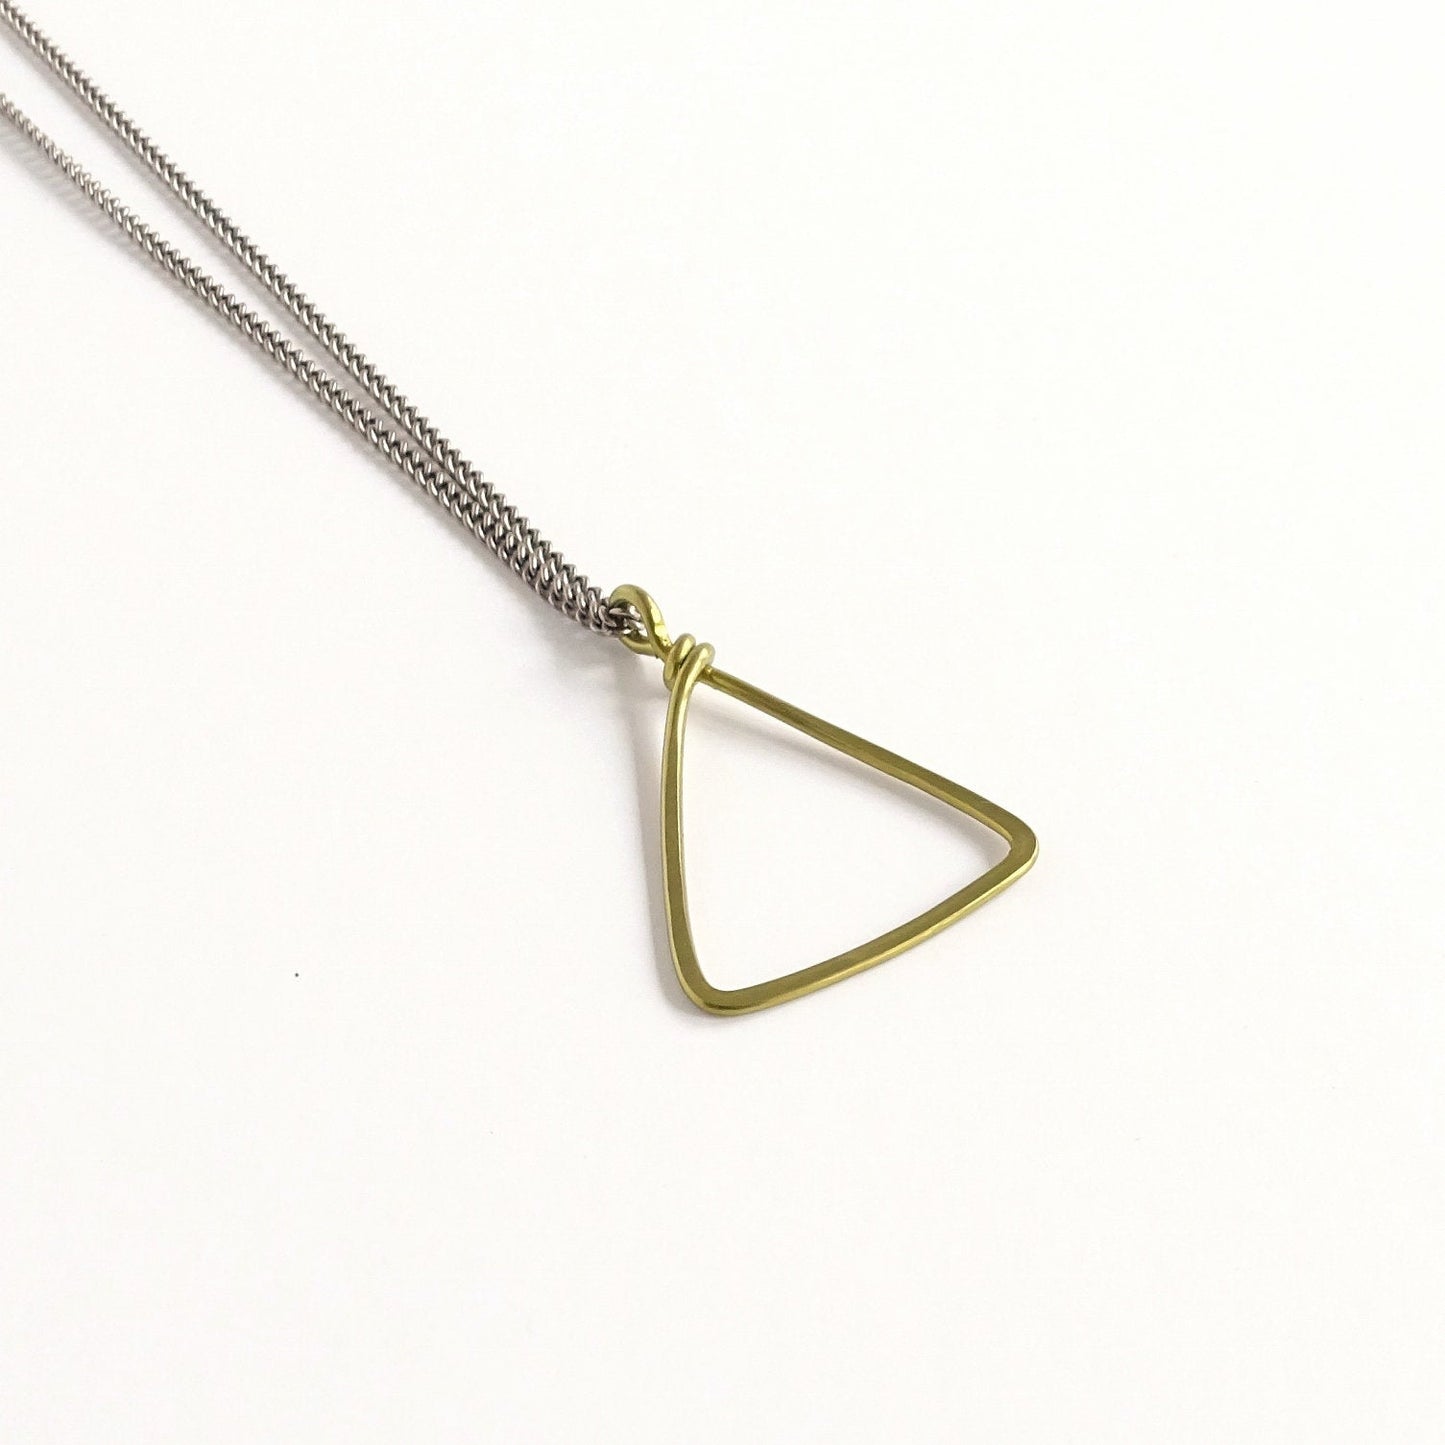 Gold Triangle Titanium Necklace, Everyday Modern Geometric Shaped Necklace, Hypoallergenic Niobium and Titanium Nickel Free Necklace